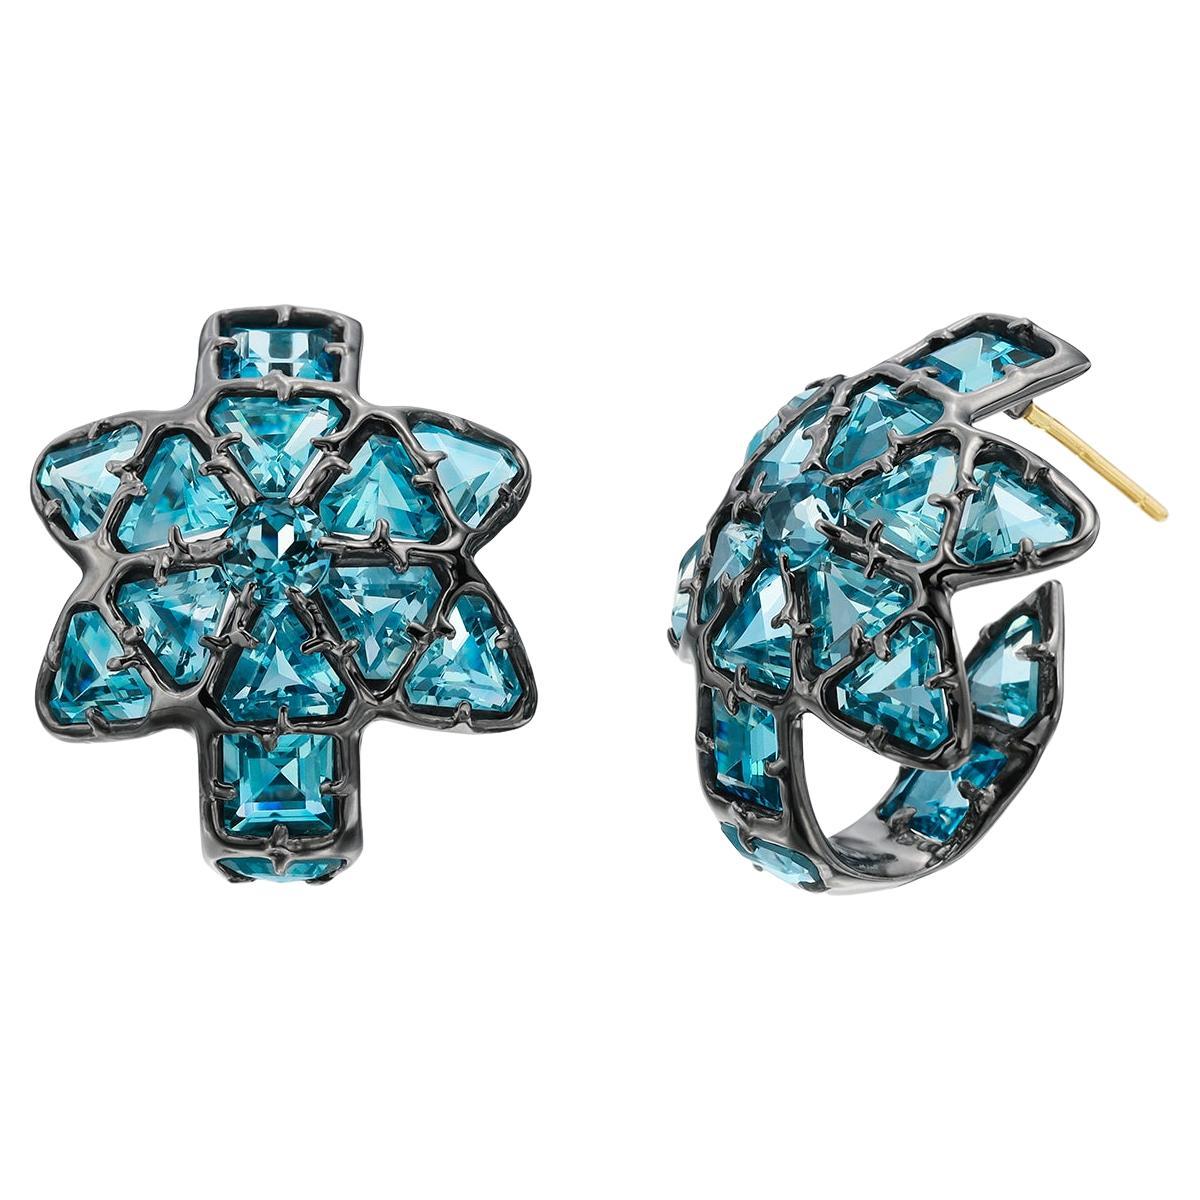 Geometric Sterling Silver Hoop Earrings with Blue Topaz